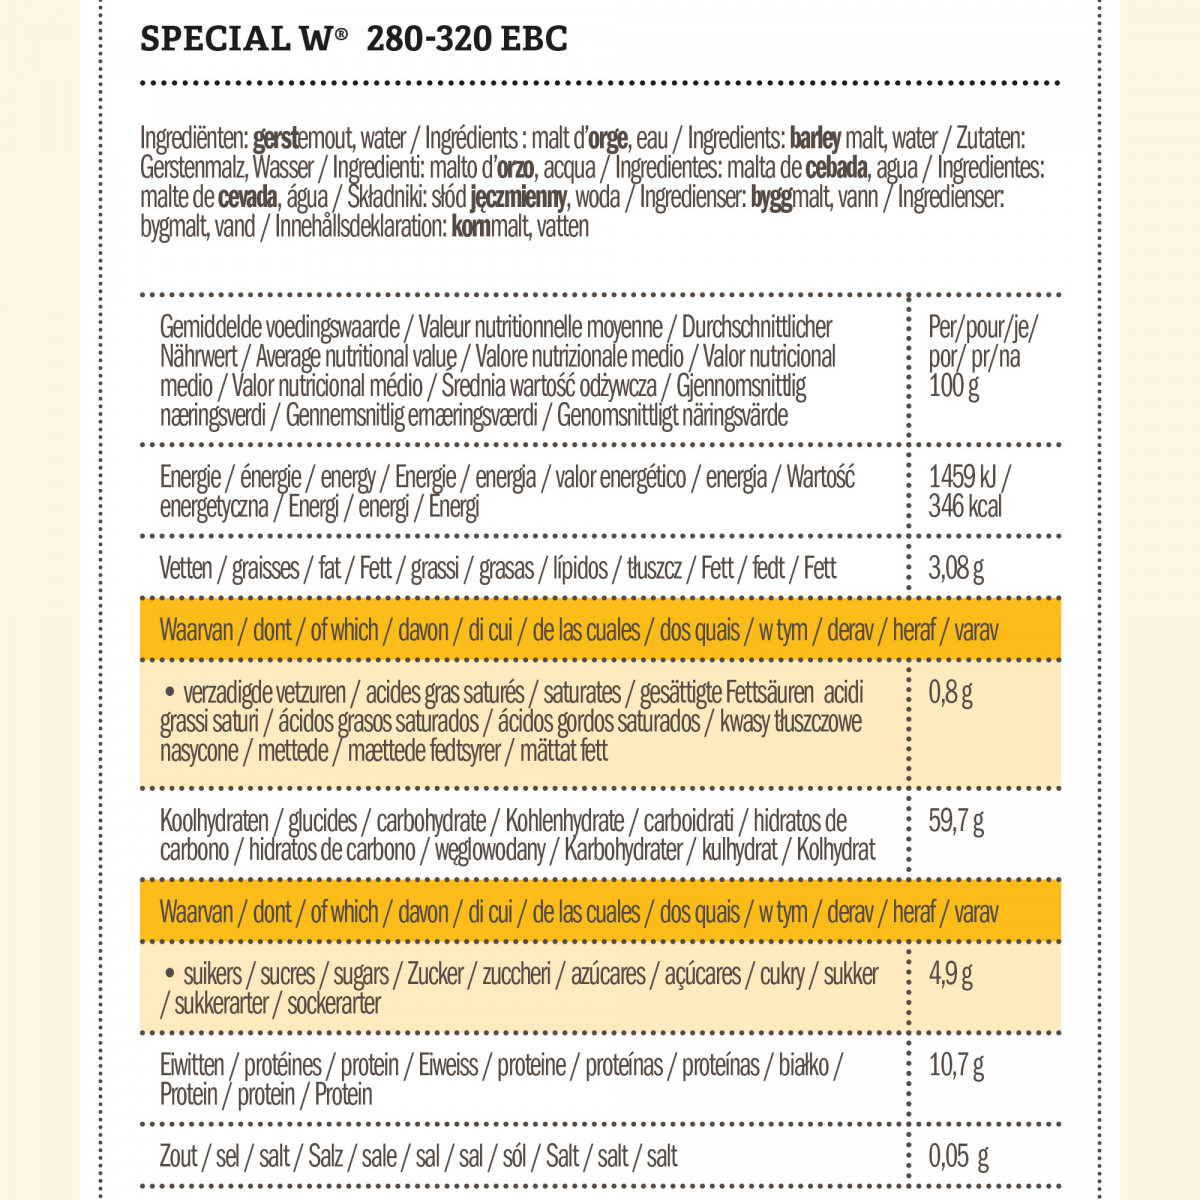 Weyermann® Special W® 280-320 EBC 5 kg